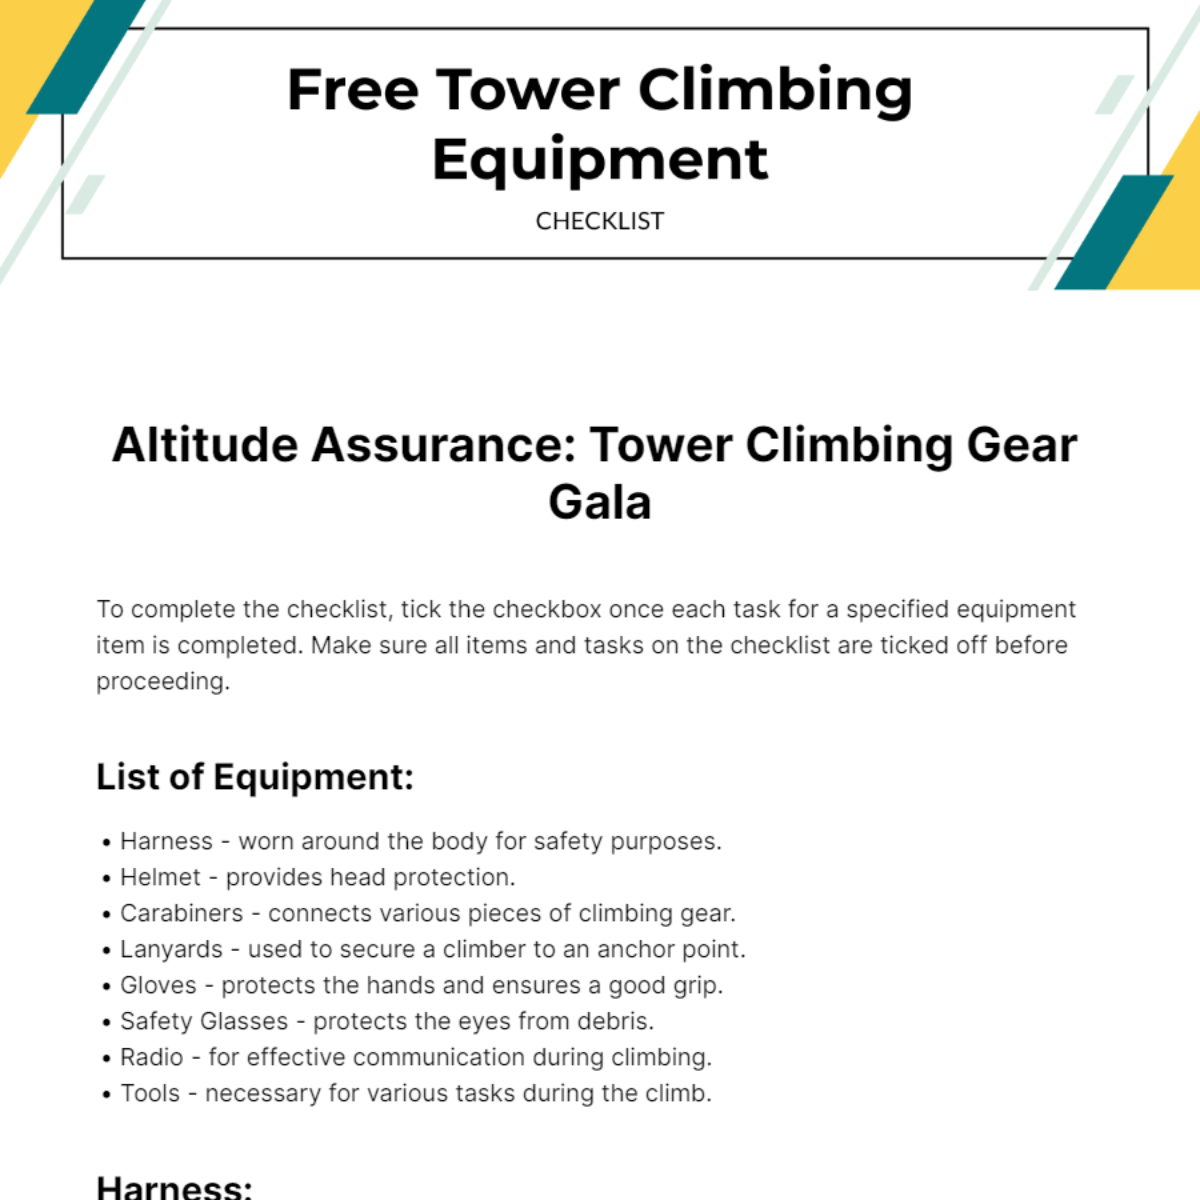 Free Tower Climbing Equipment Checklist Template